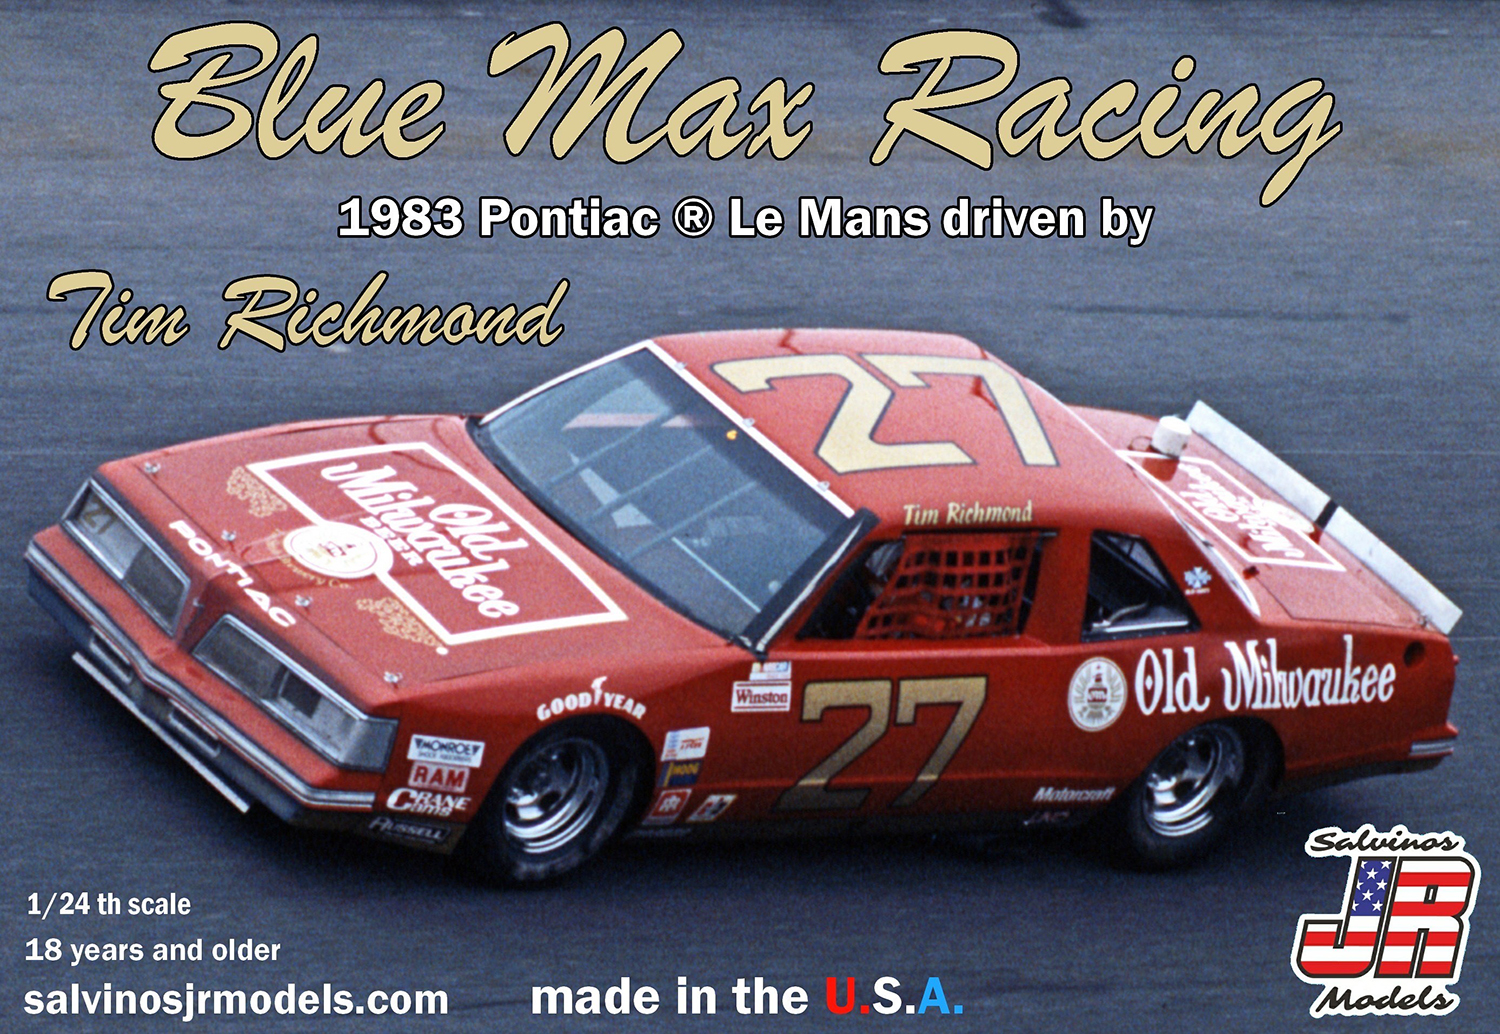 1/24 NASCAR ブルーマックス・レーシング 1983 ポンティアック ル